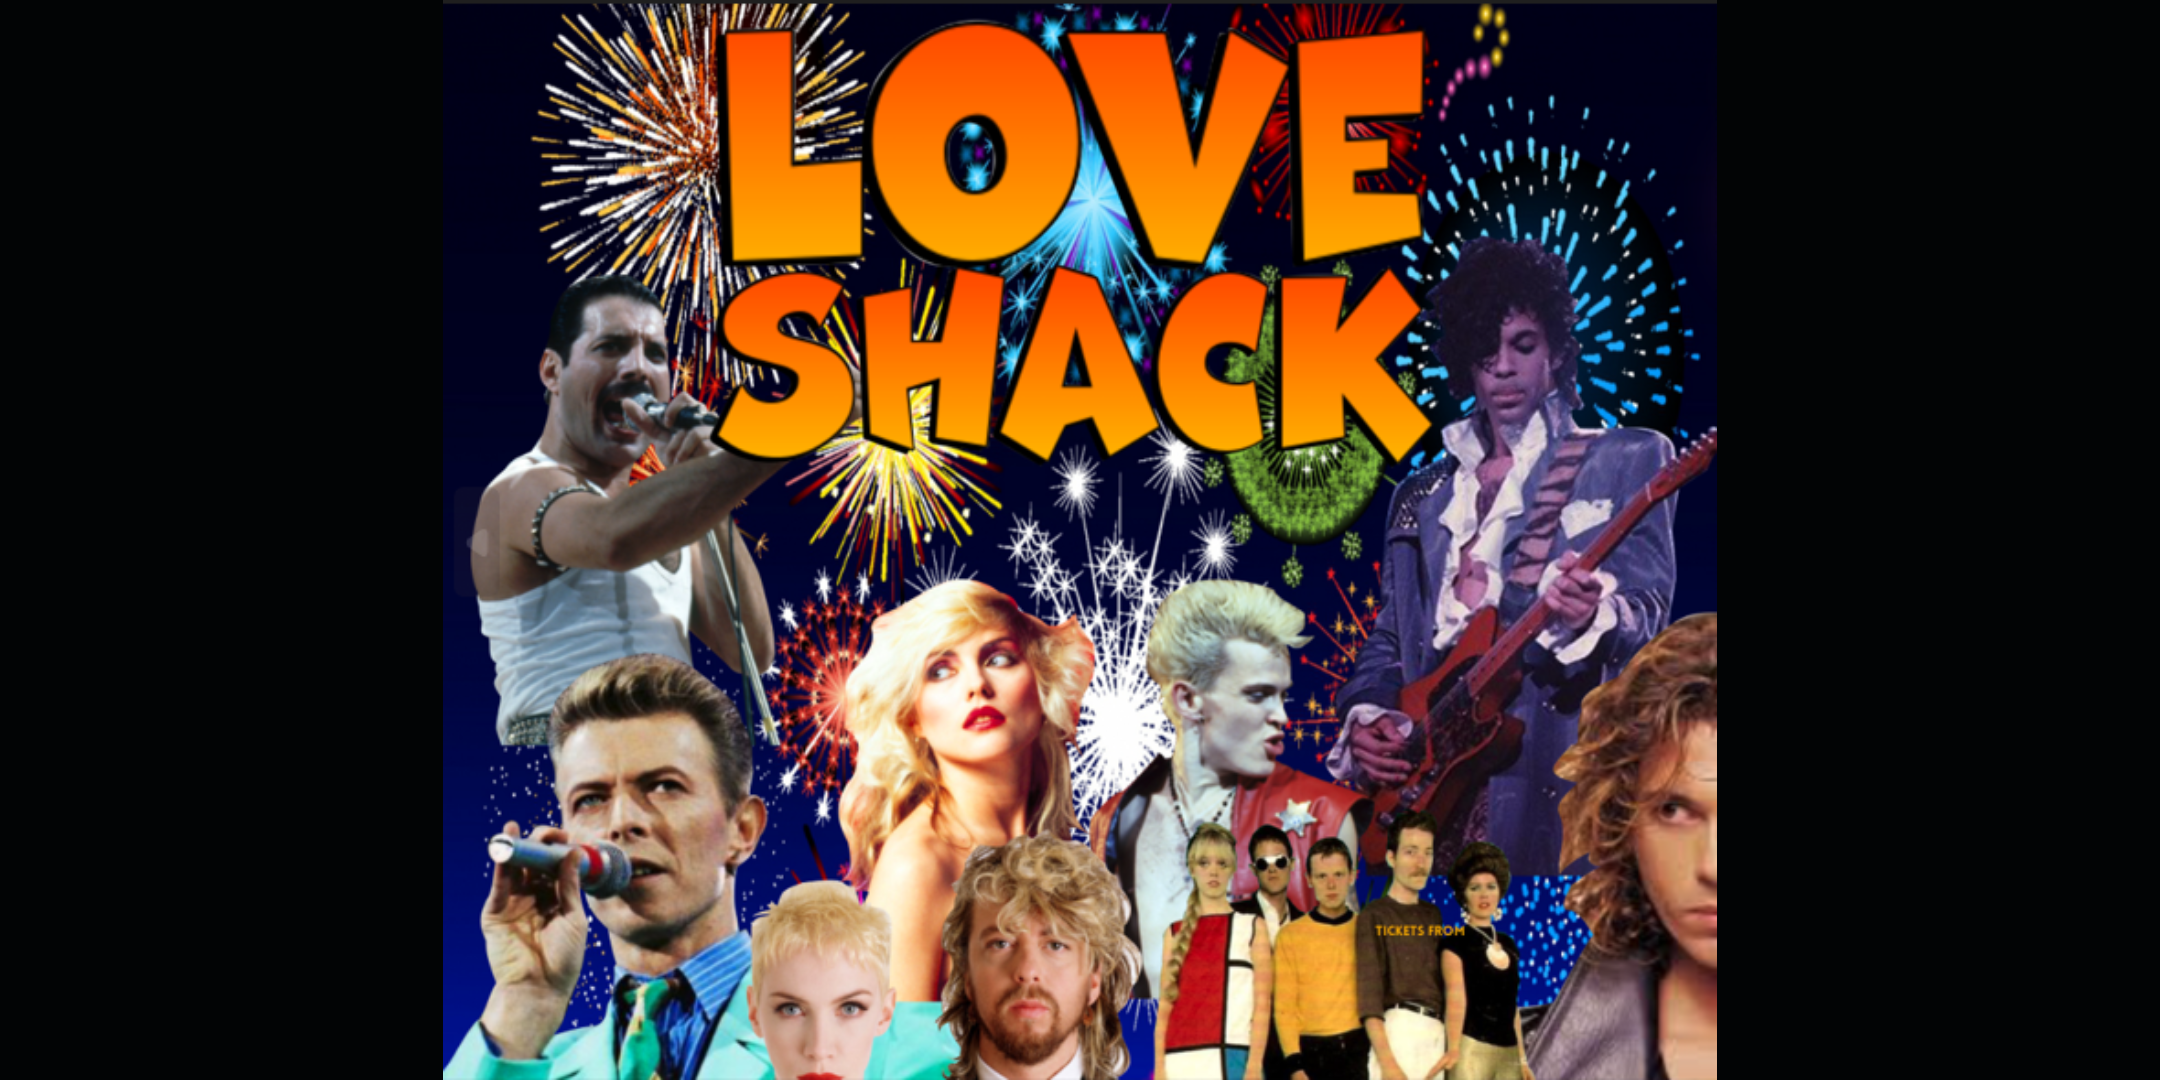 Loveshack – Saturday Cover Image